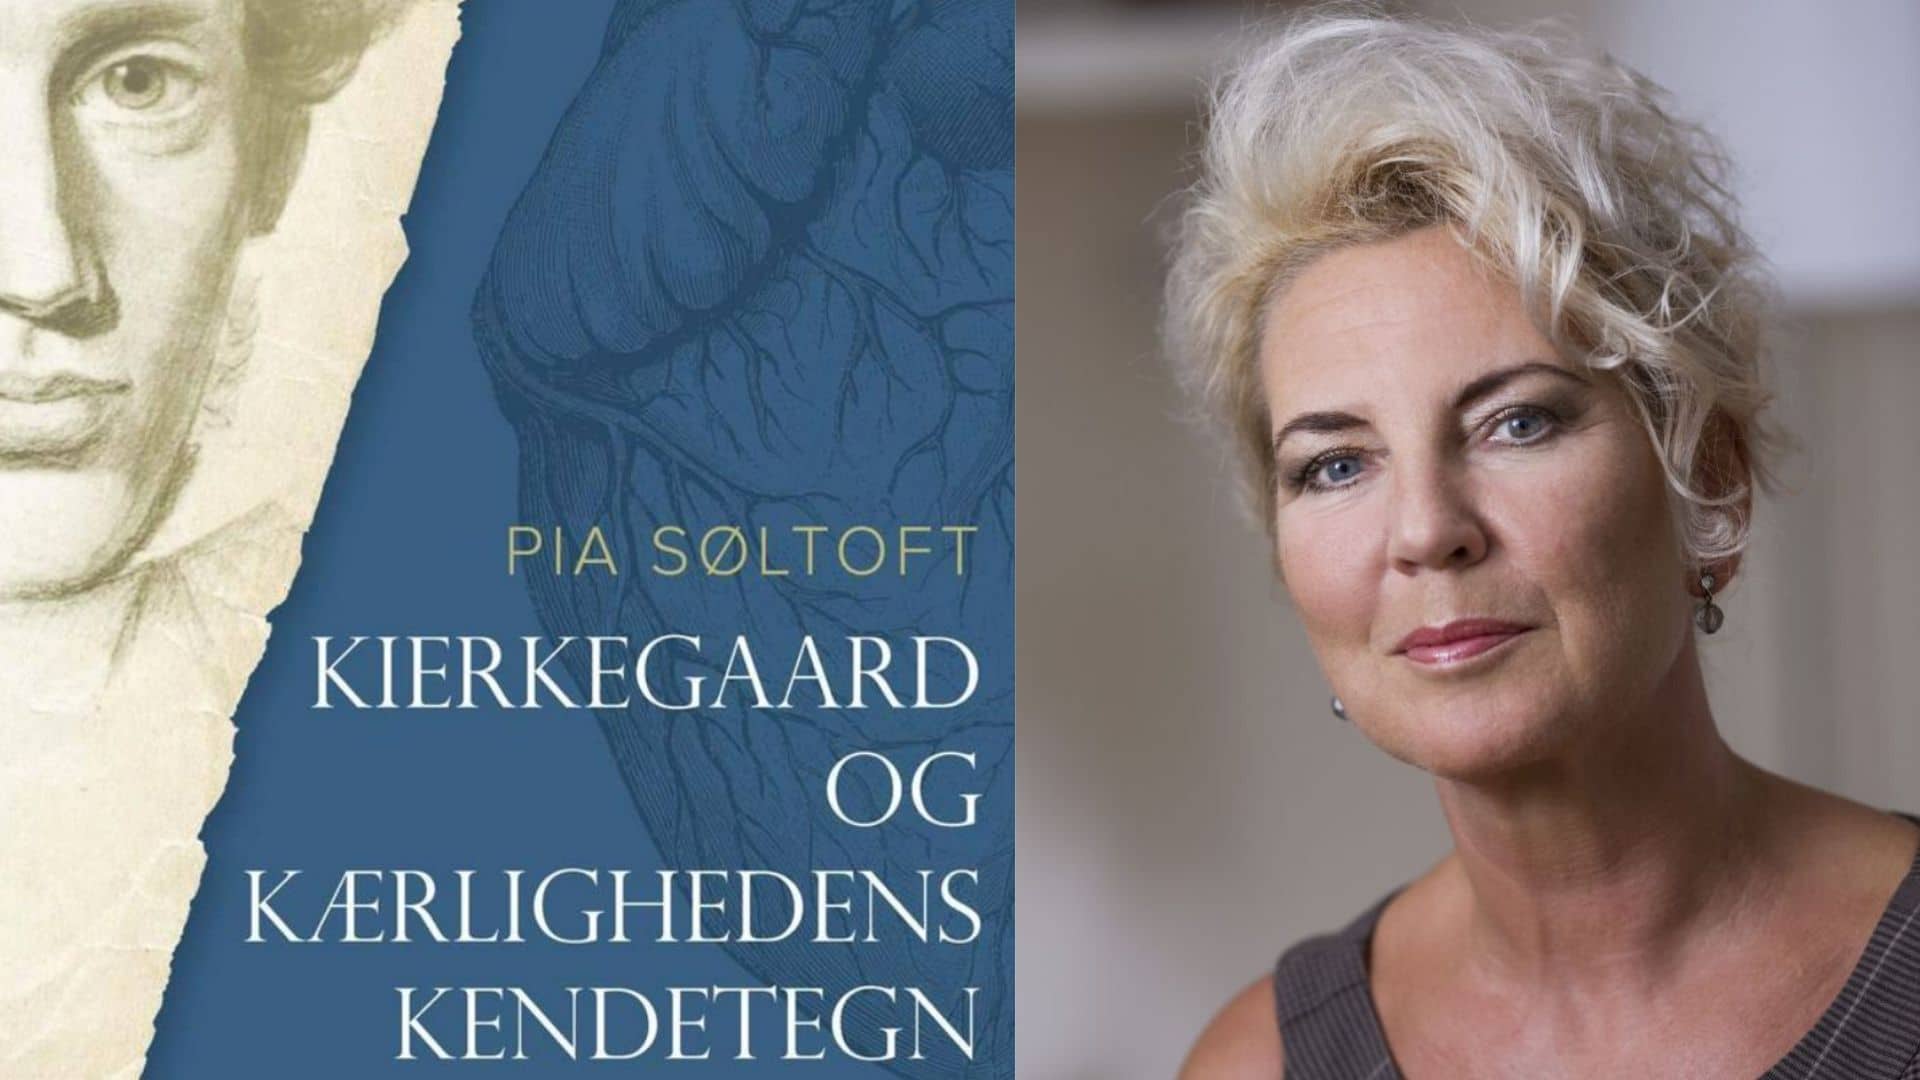 Bliv klogere på den verdenskendte danske filosof Søren Kierkegaard